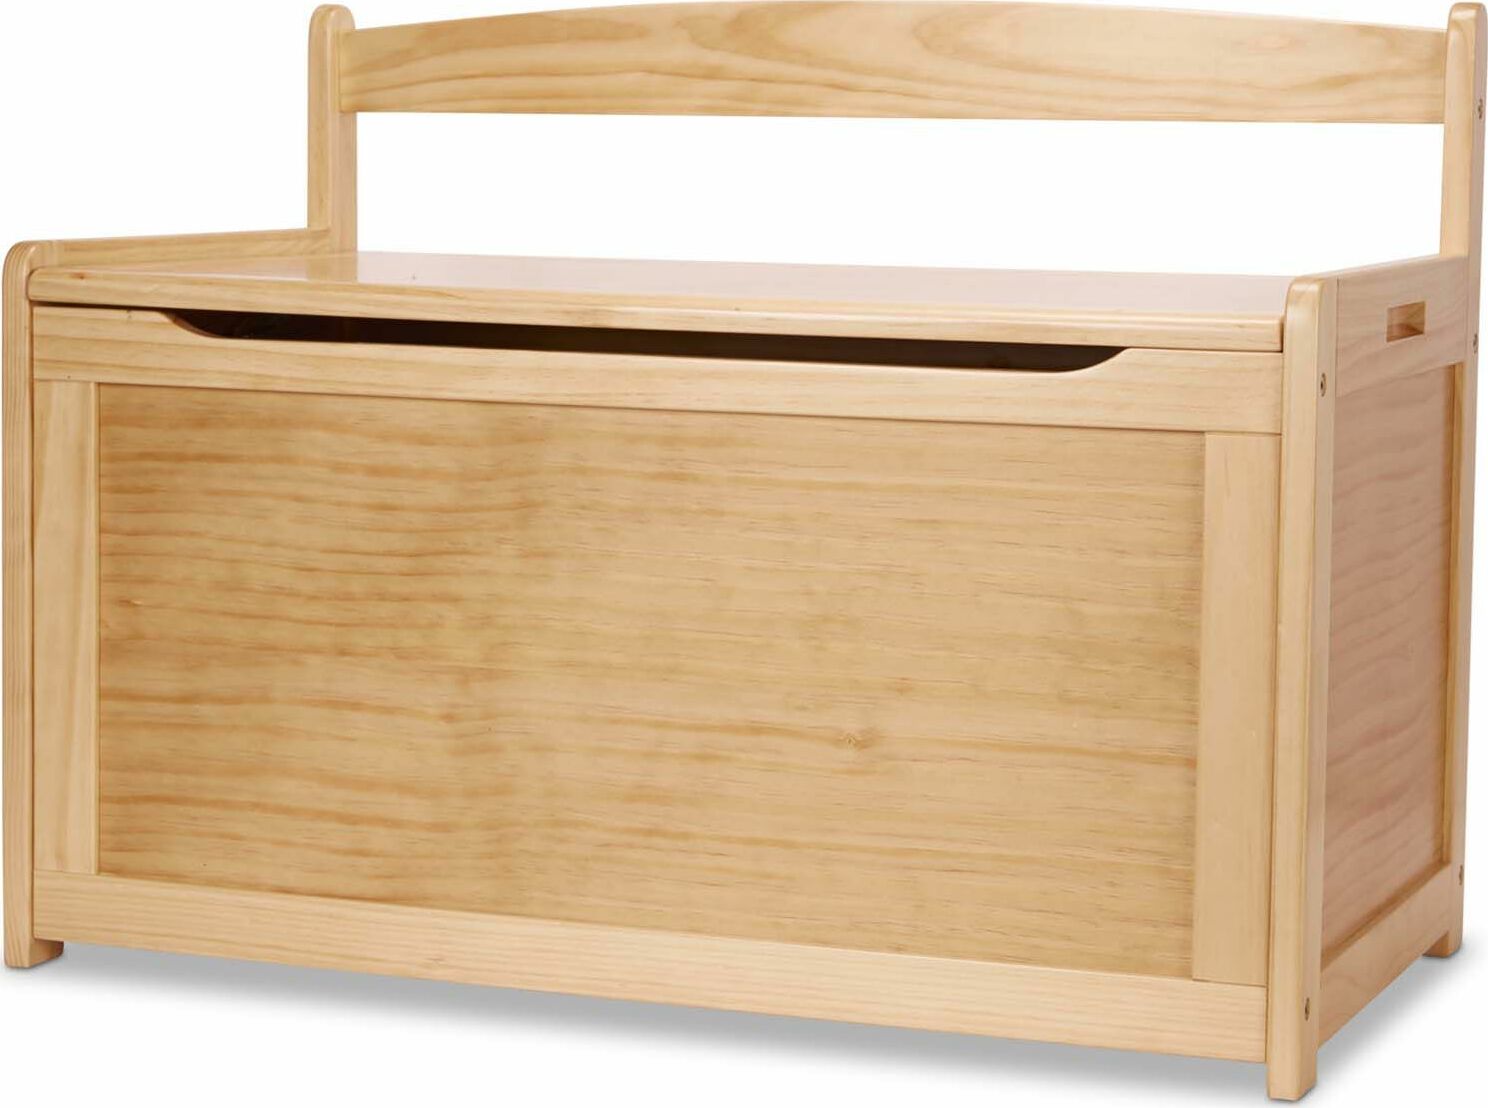 melissa & doug wooden toy chest